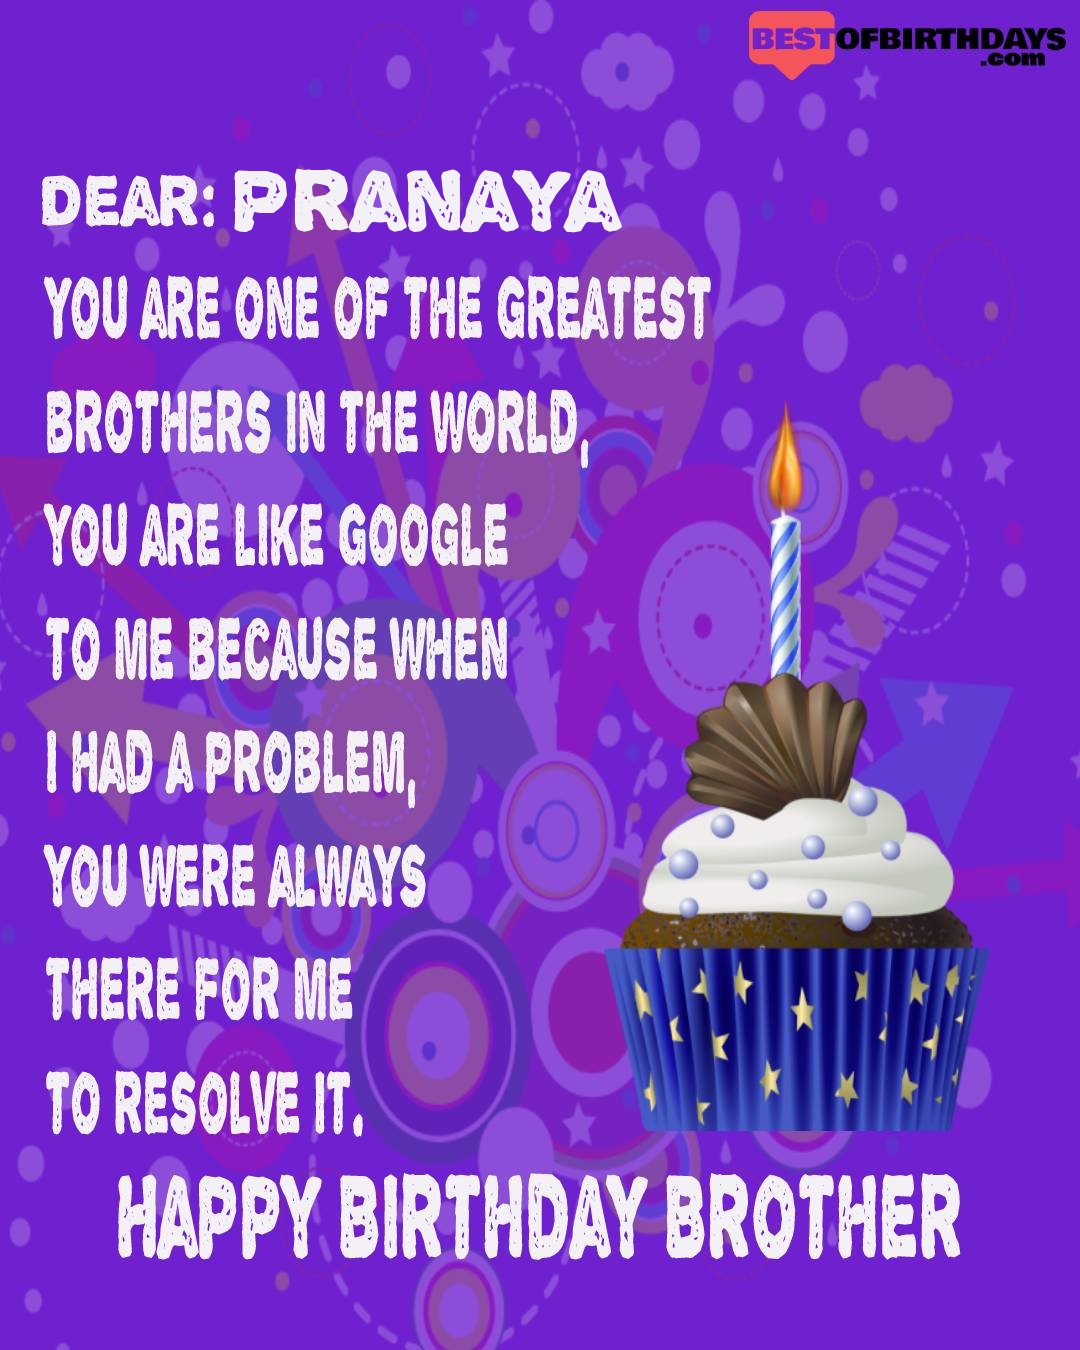 Happy birthday pranaya bhai brother bro